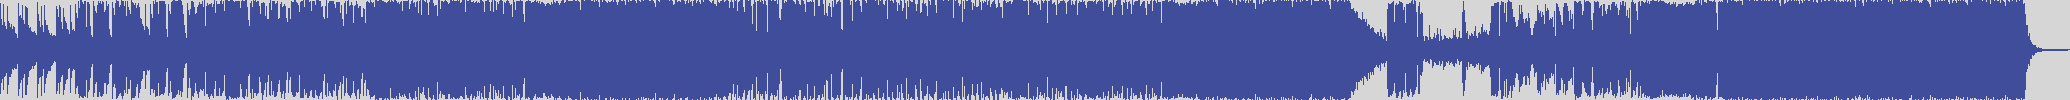 coverland_records [smile1058] Ohp - Blame [Original Mix] audio wave form